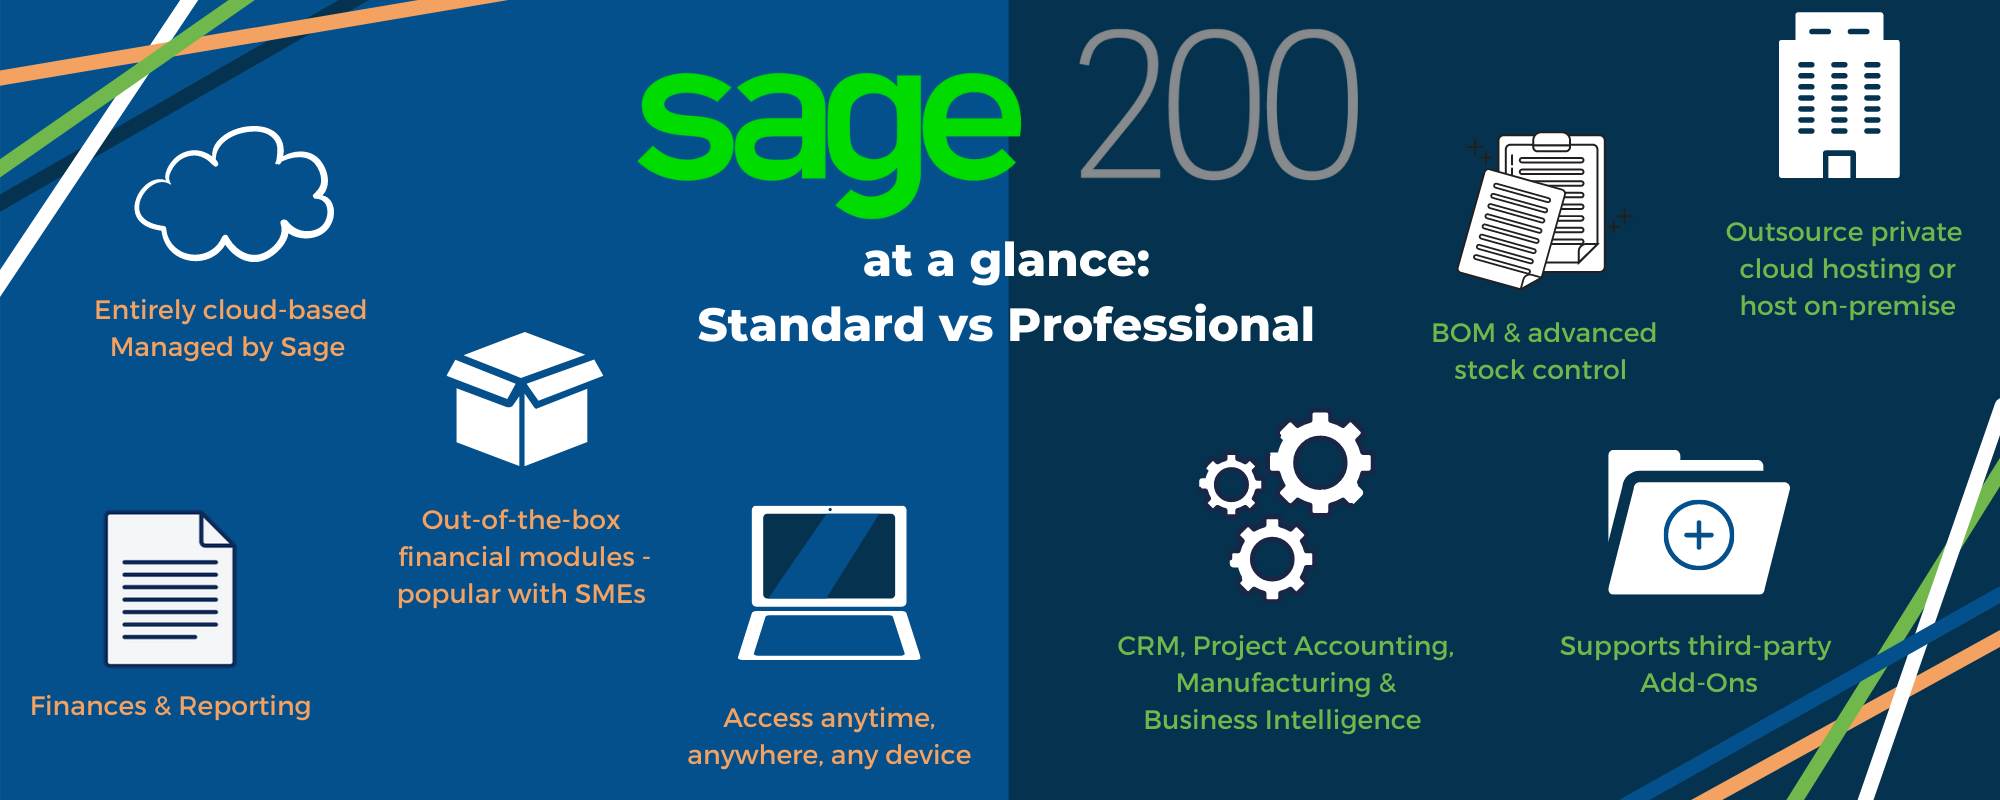 blog sage 200 pro standard comparison infographic